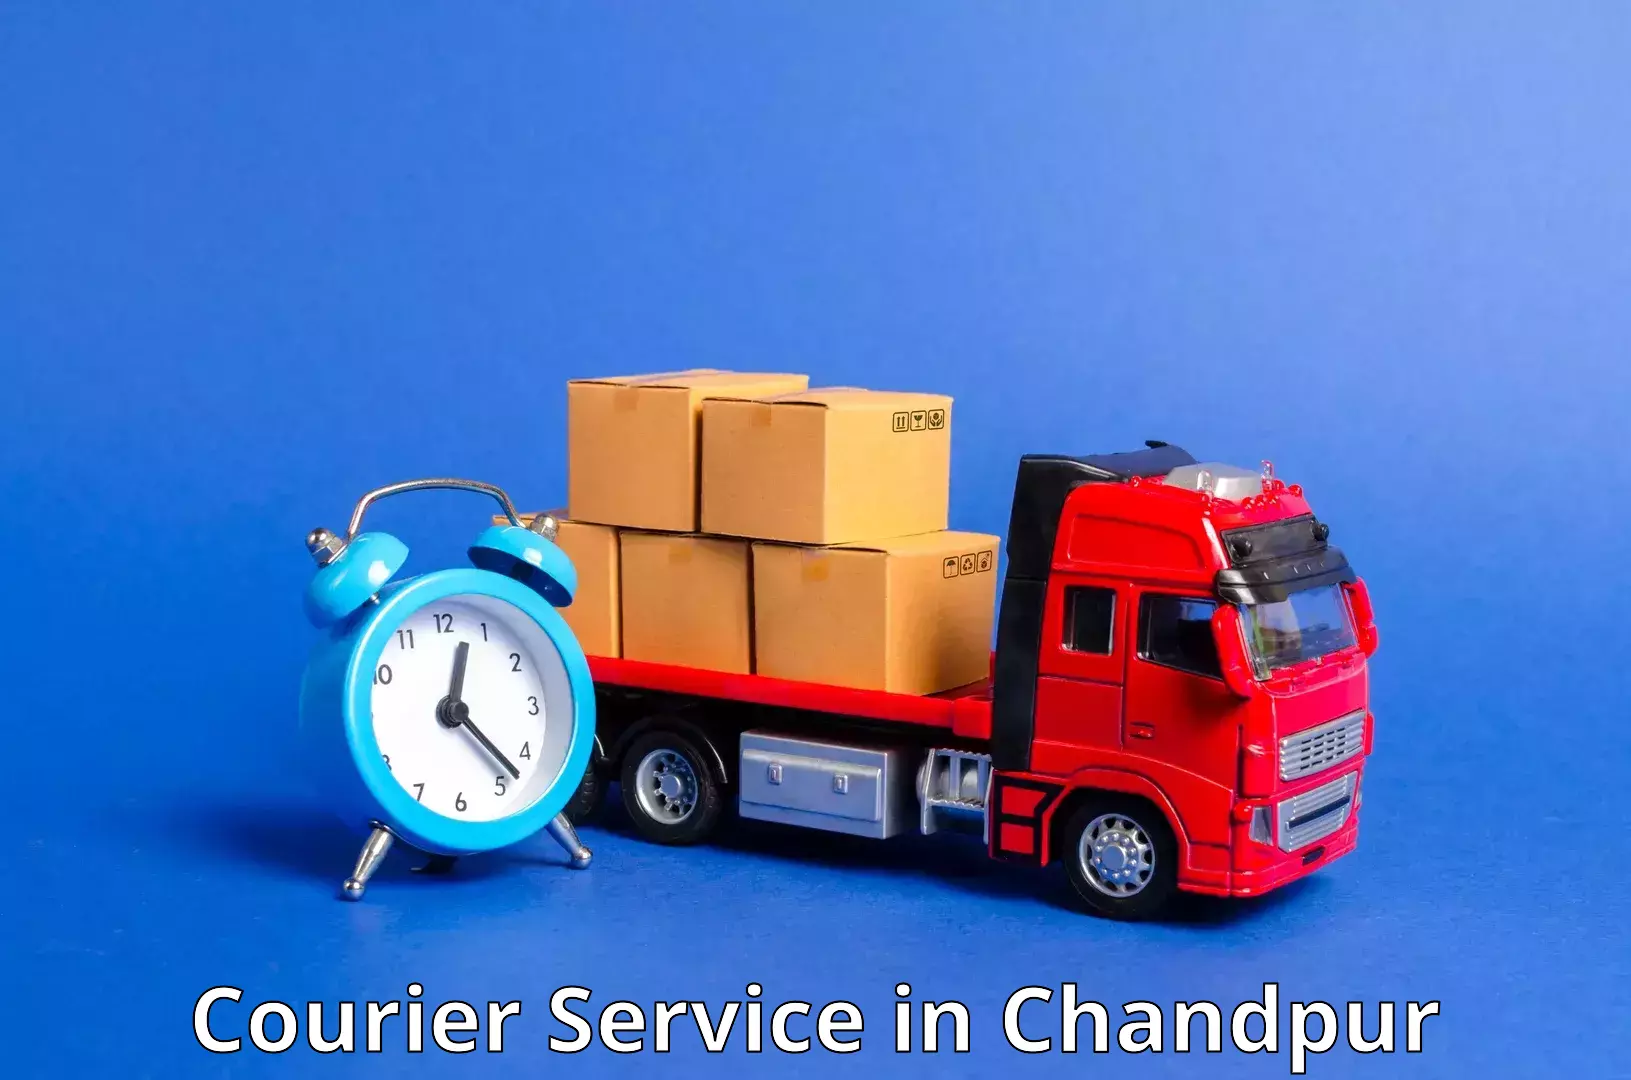 Nationwide courier service in Chandpur